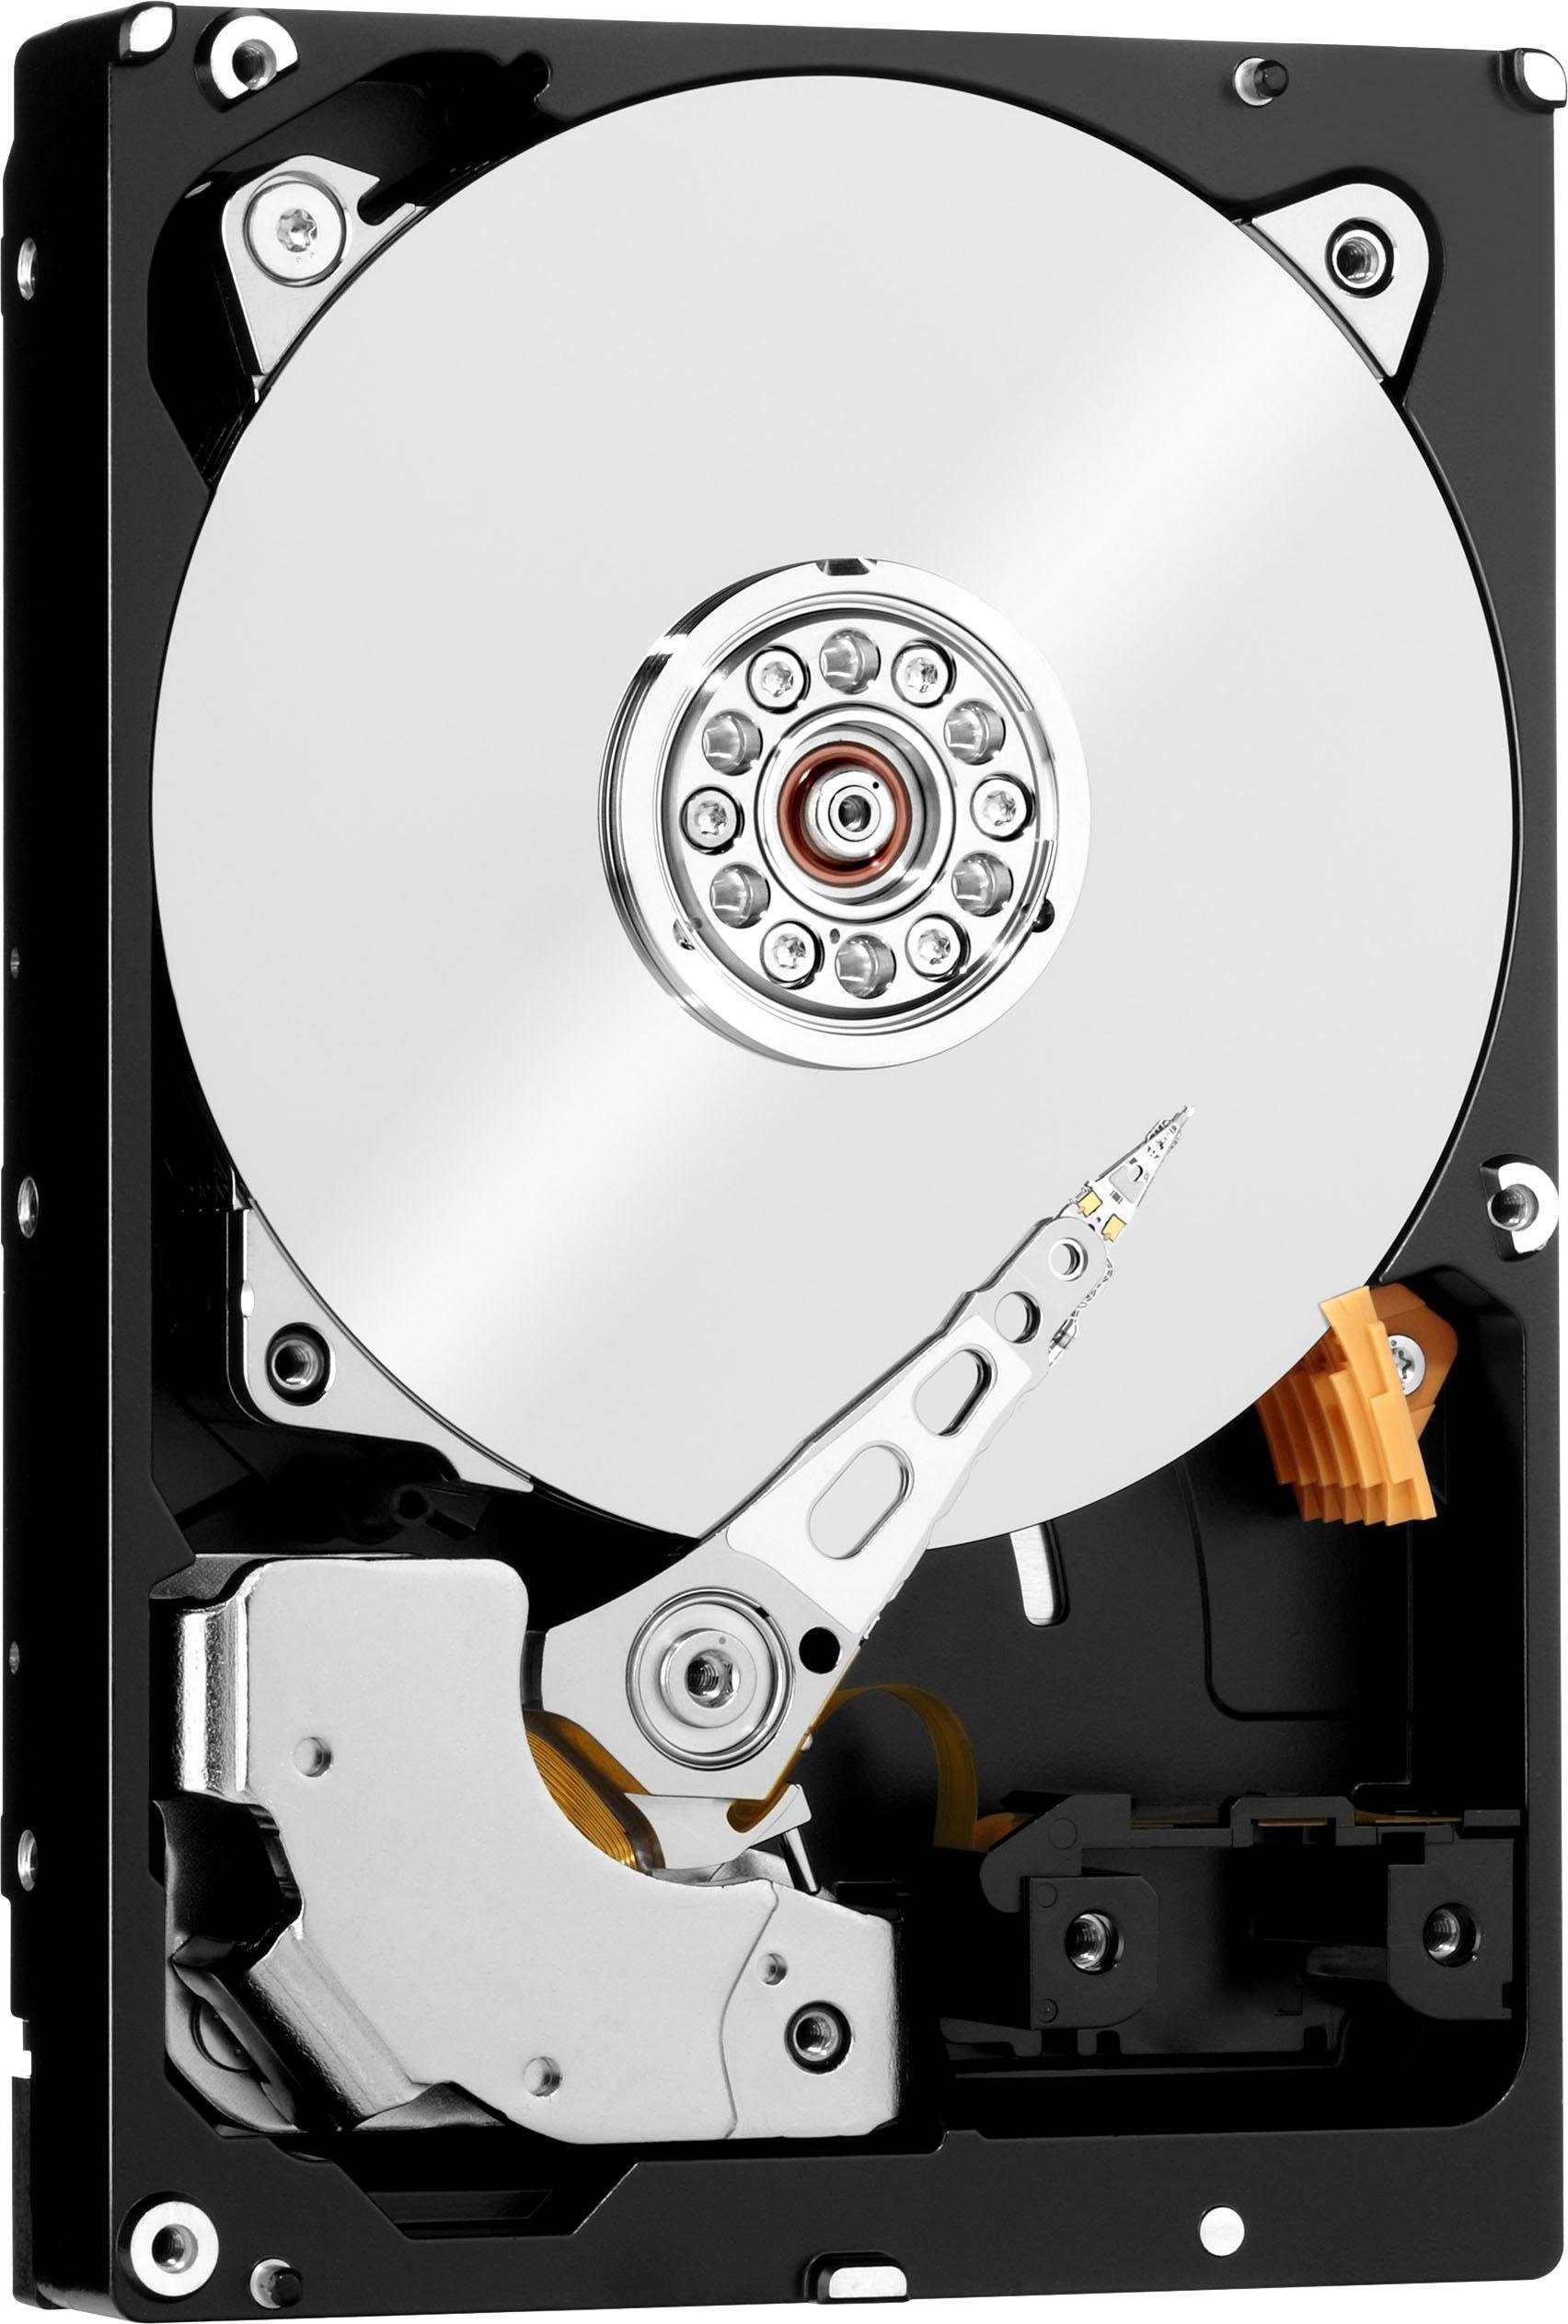 Western Digital HDD-NAS-Festplatte »WD Red Pro«, 3,5 Zoll, Anschluss SATA, Bulk